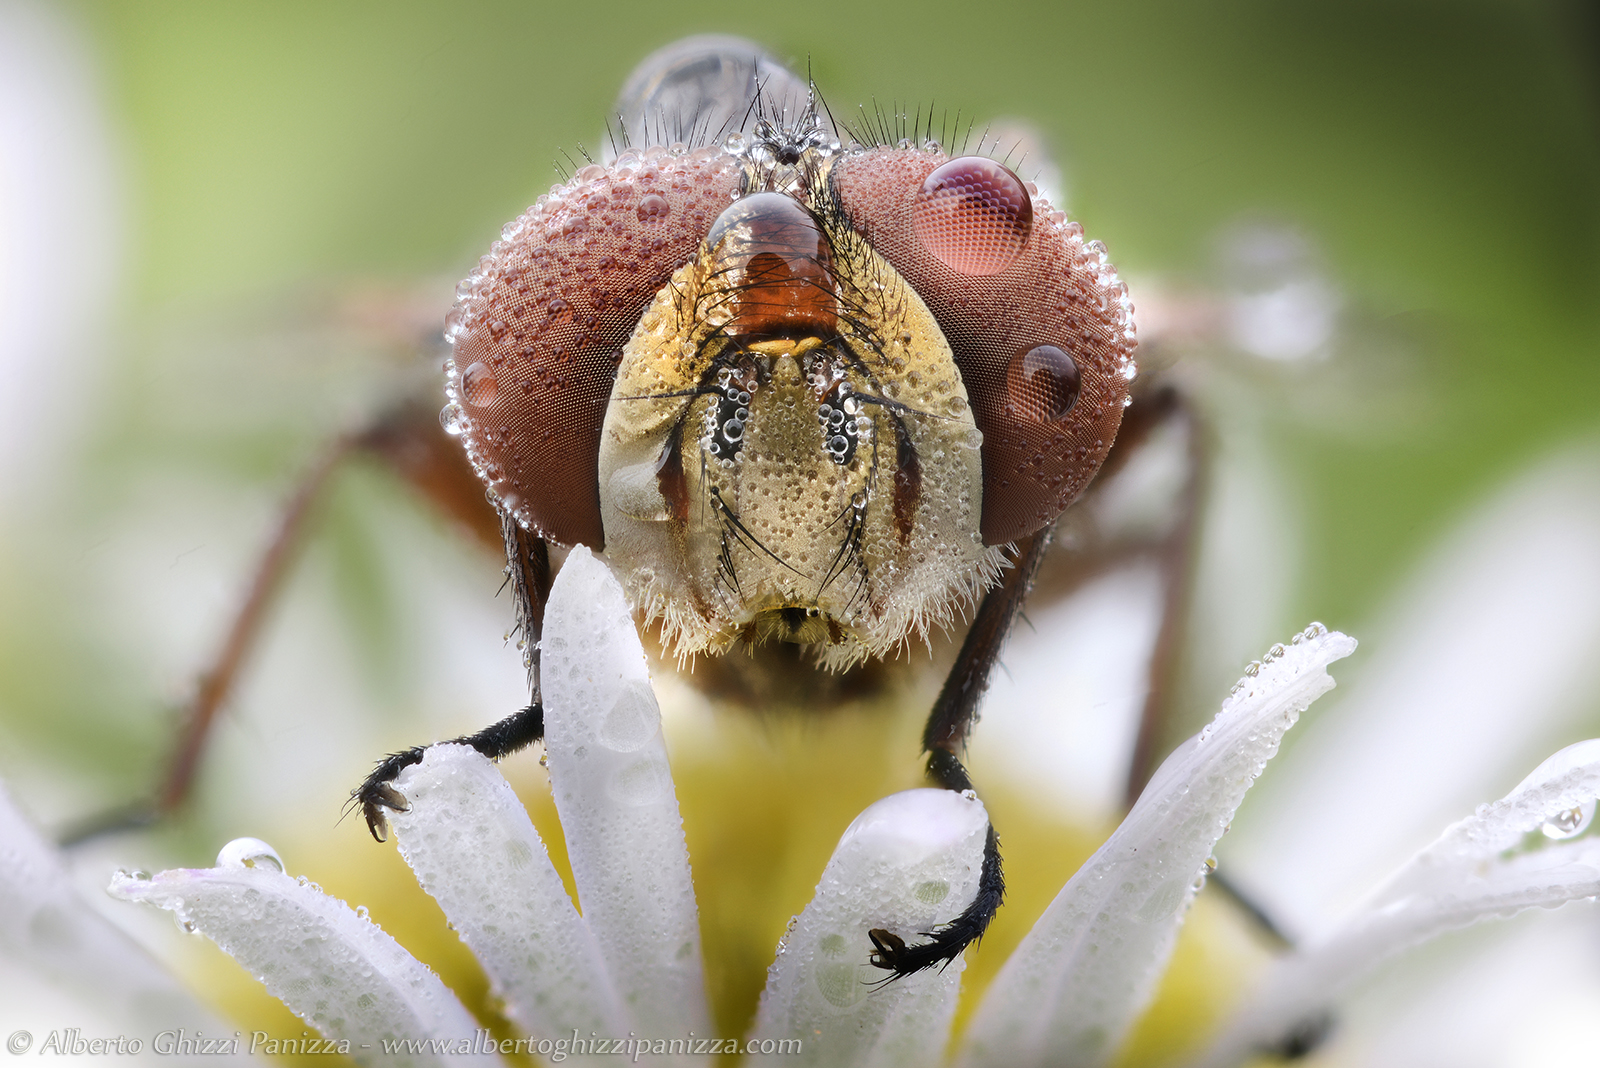 A fly and its daisy...